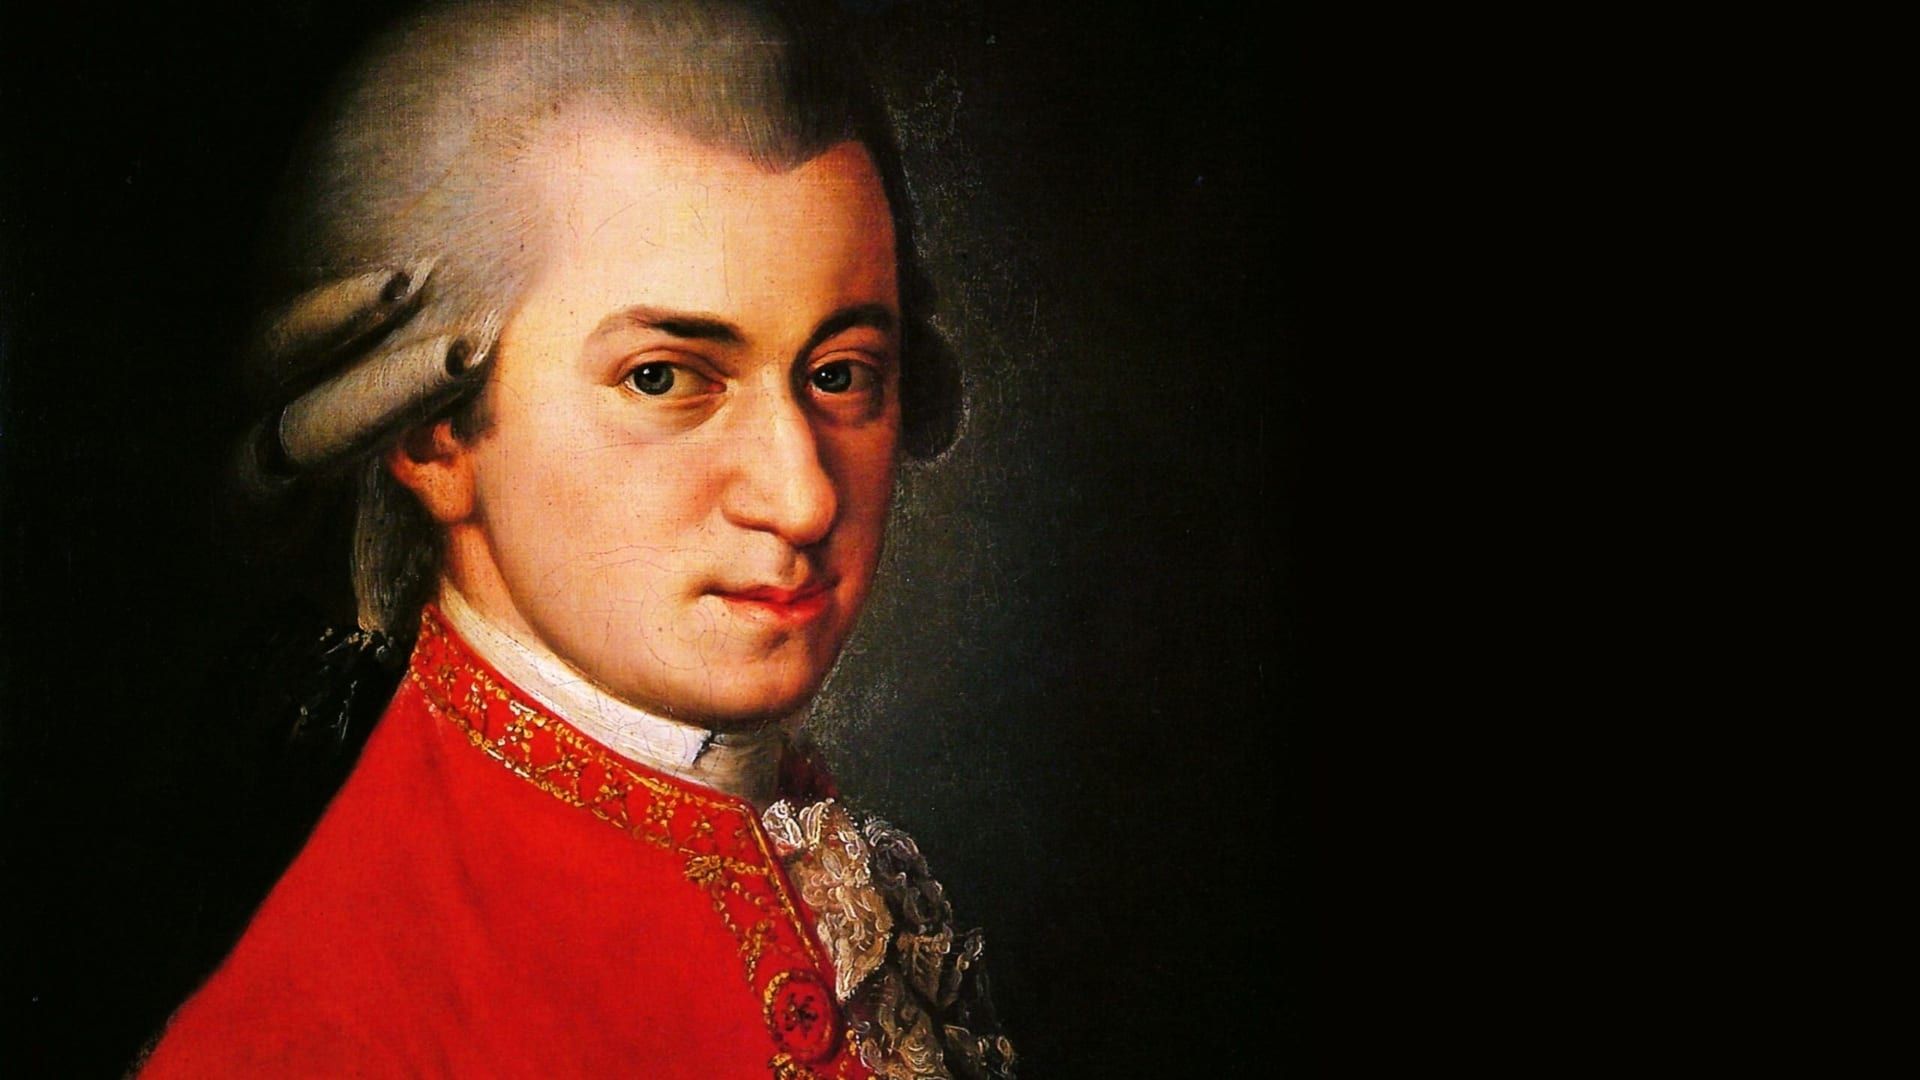 The Genius of Mozart background